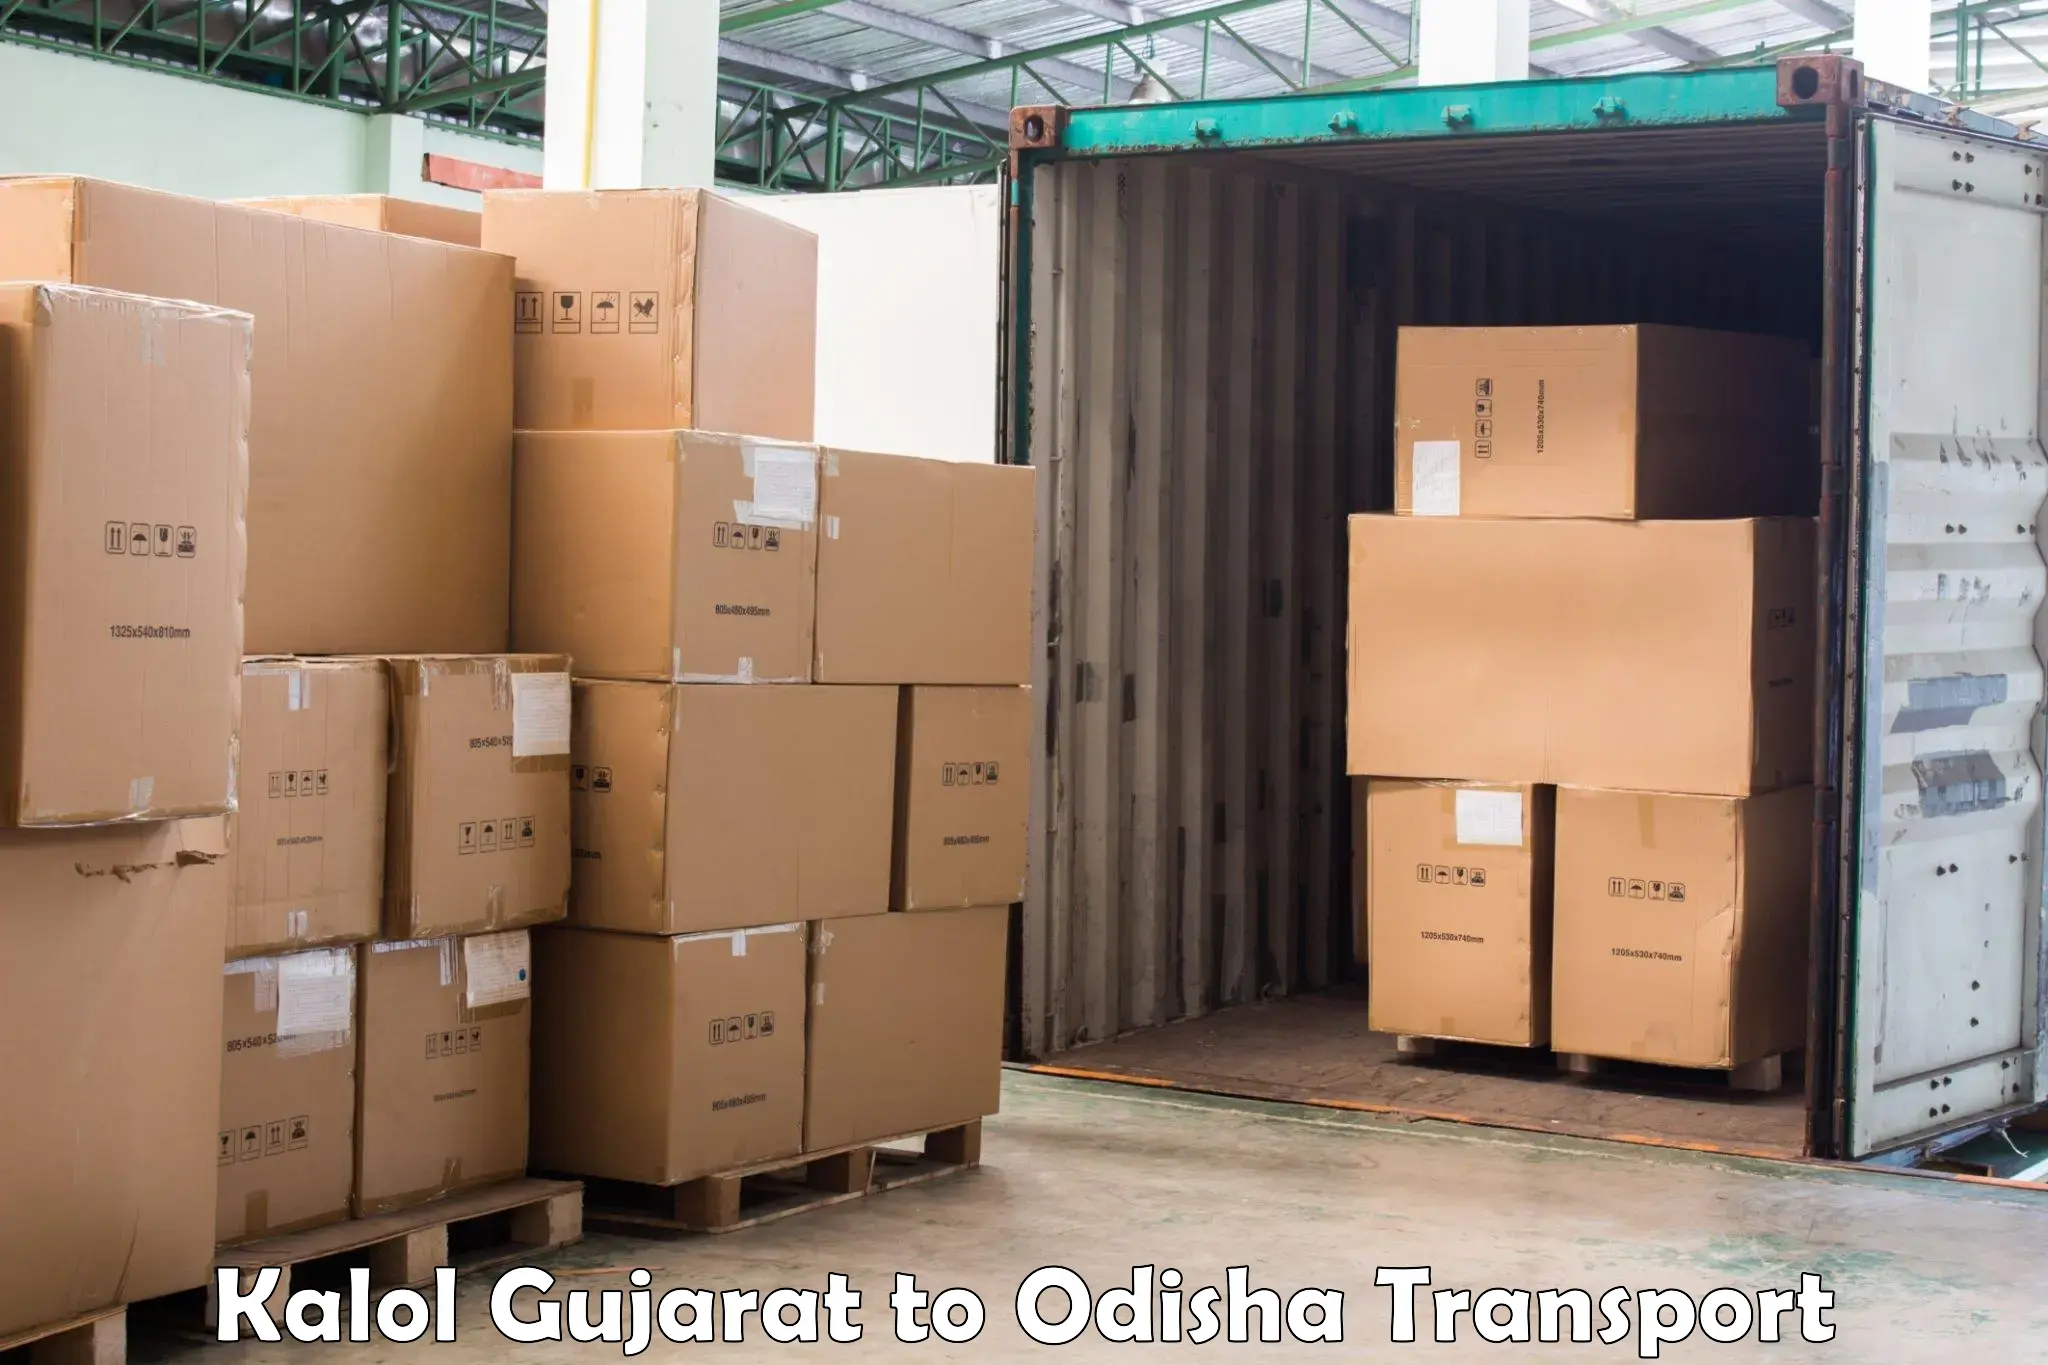 Truck transport companies in India Kalol Gujarat to Brajrajnagar